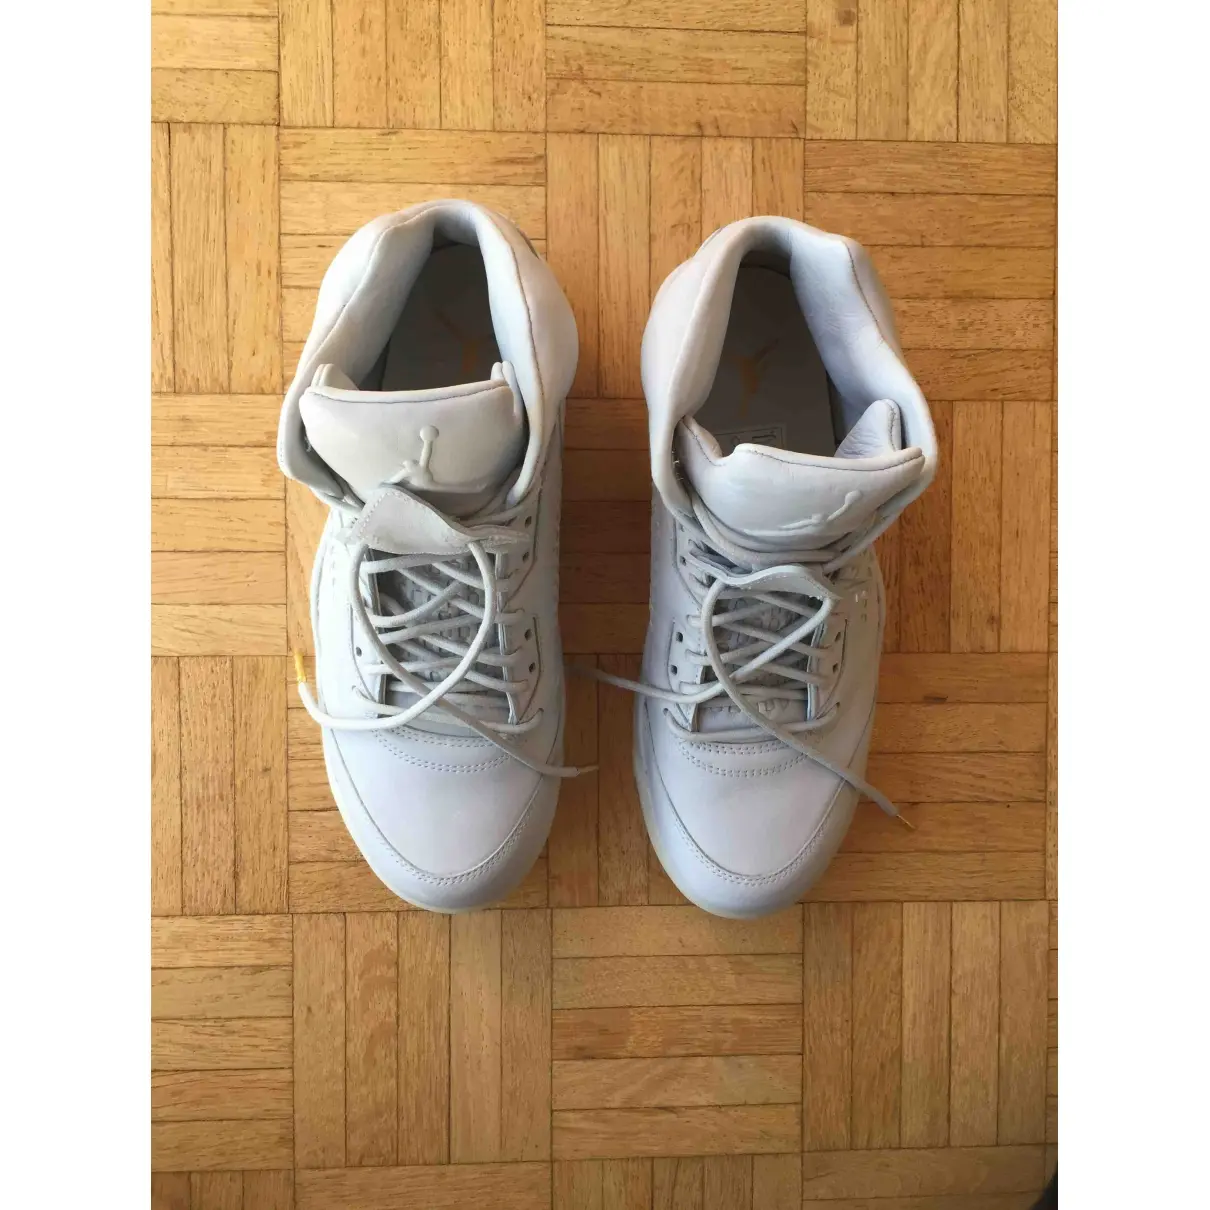 Buy Nike Jordan leather high trainers online